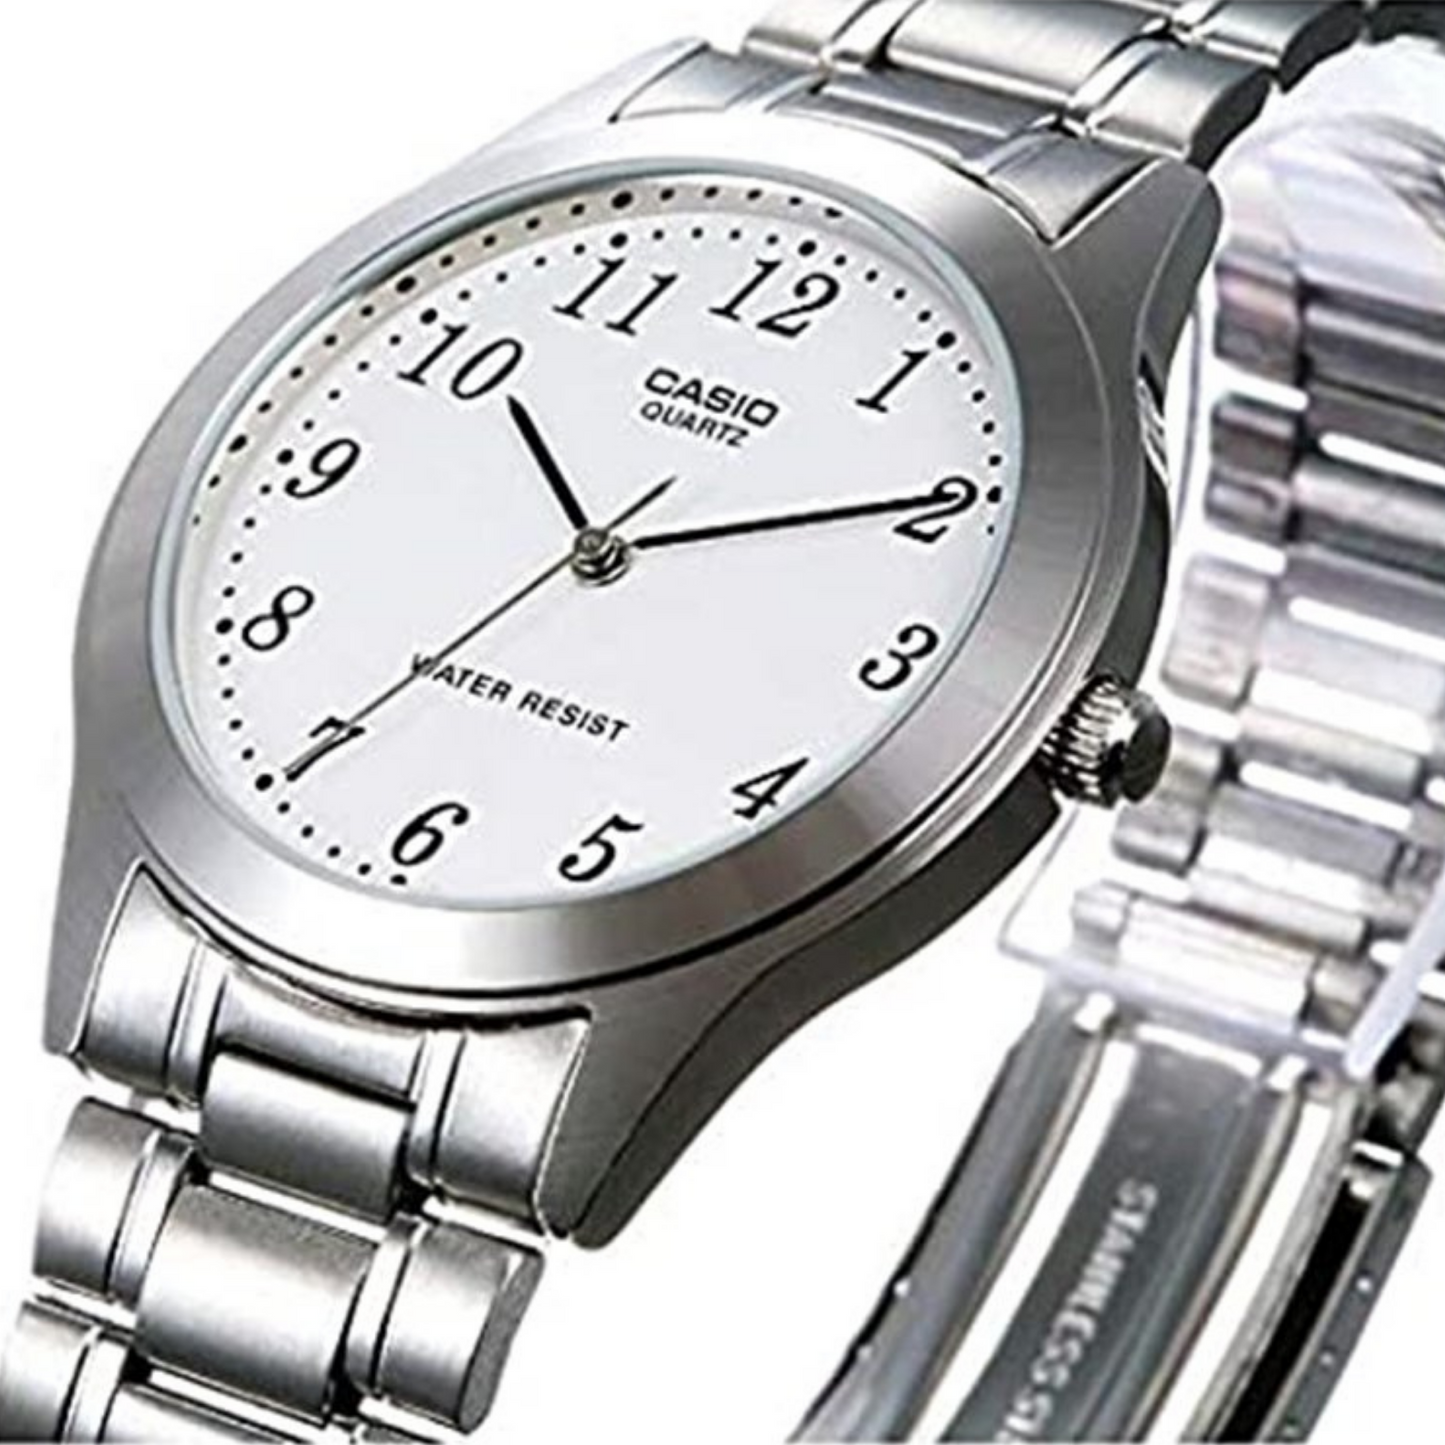 Reloj Casio mujer Modelo LTP-1129A-7B